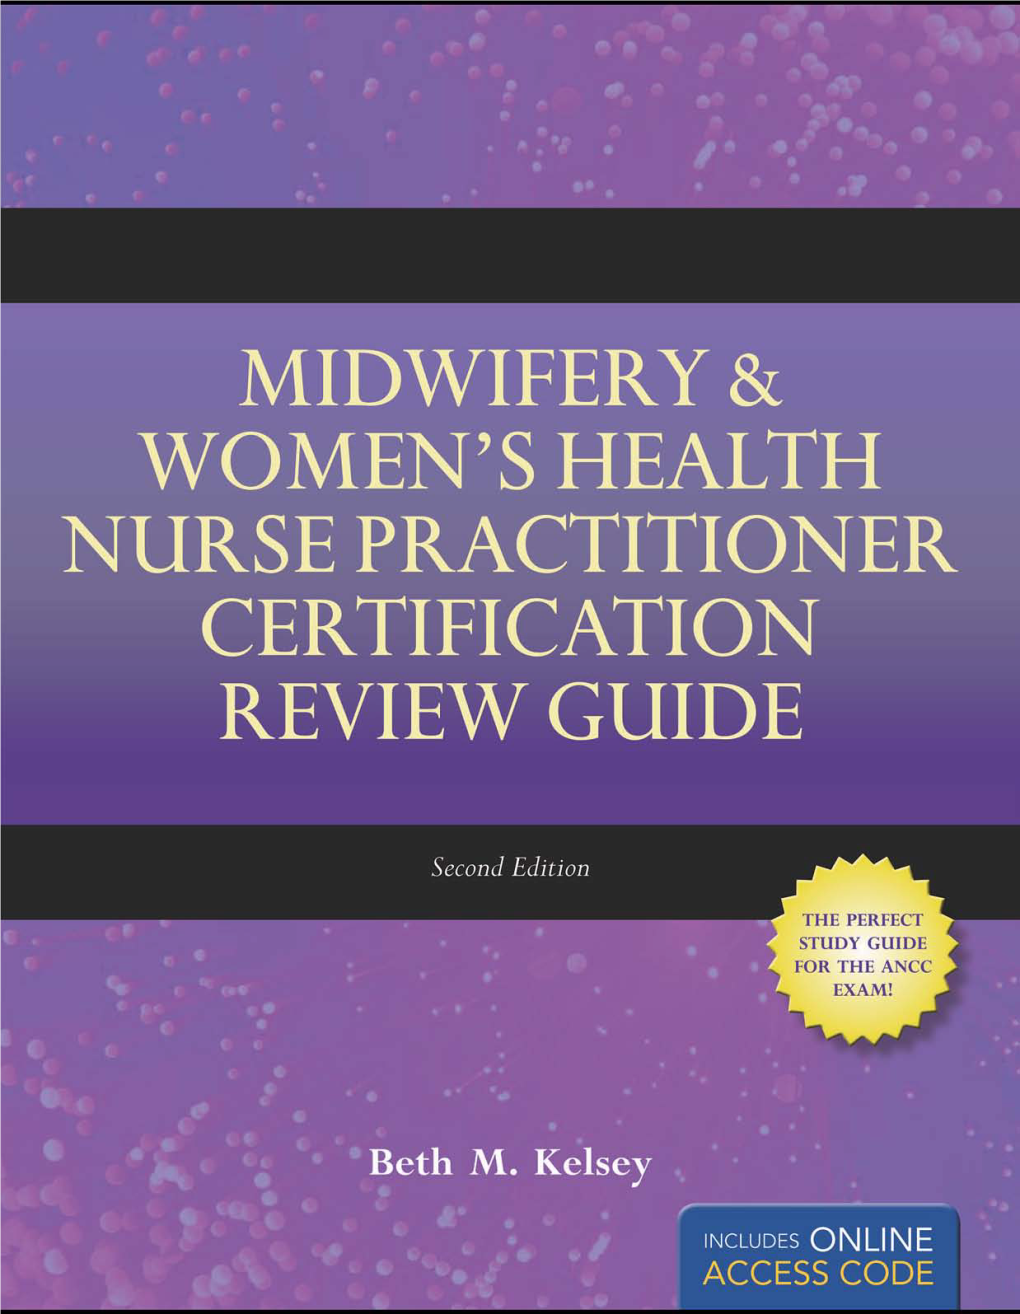 Midwifery & Women's Health Nurse Practitioner Certification Review